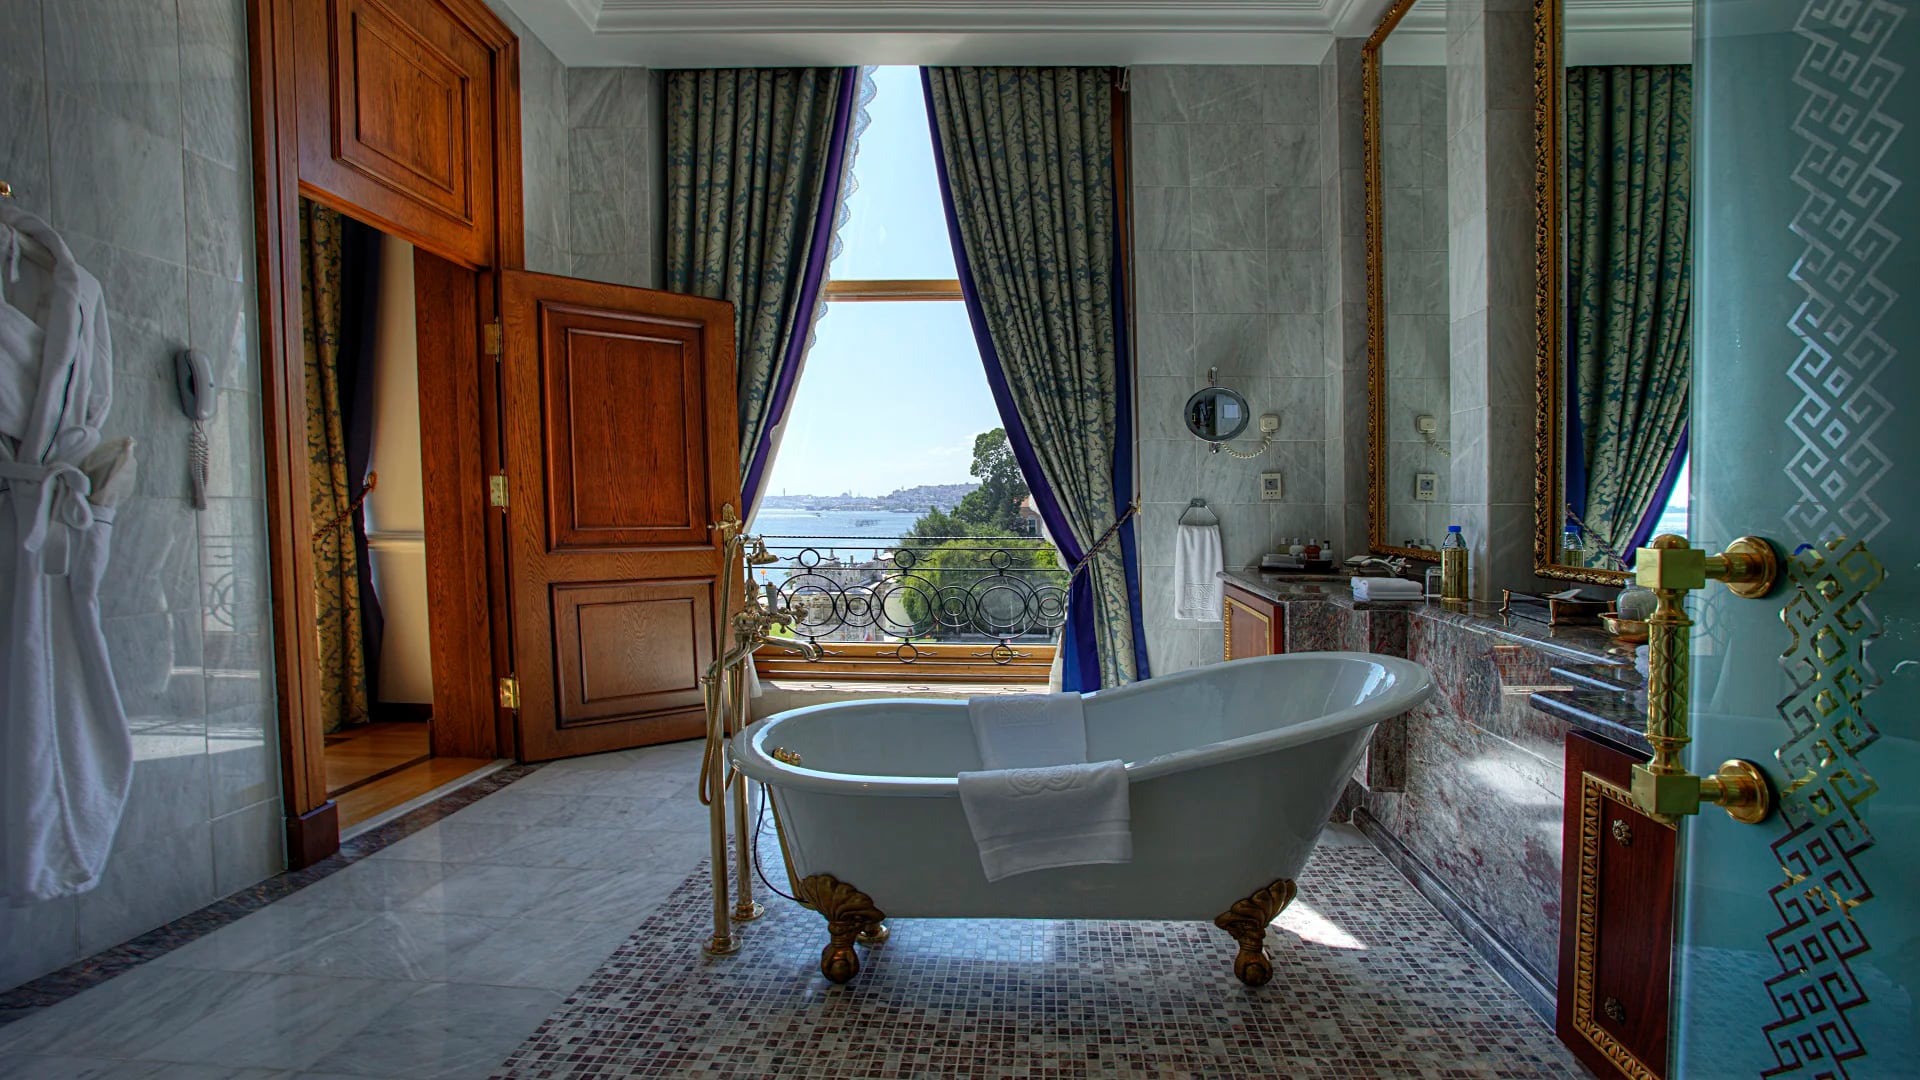 Las suites del hotel con un baño a puro lujo (Fine Hotels Spa & Resort of The World)